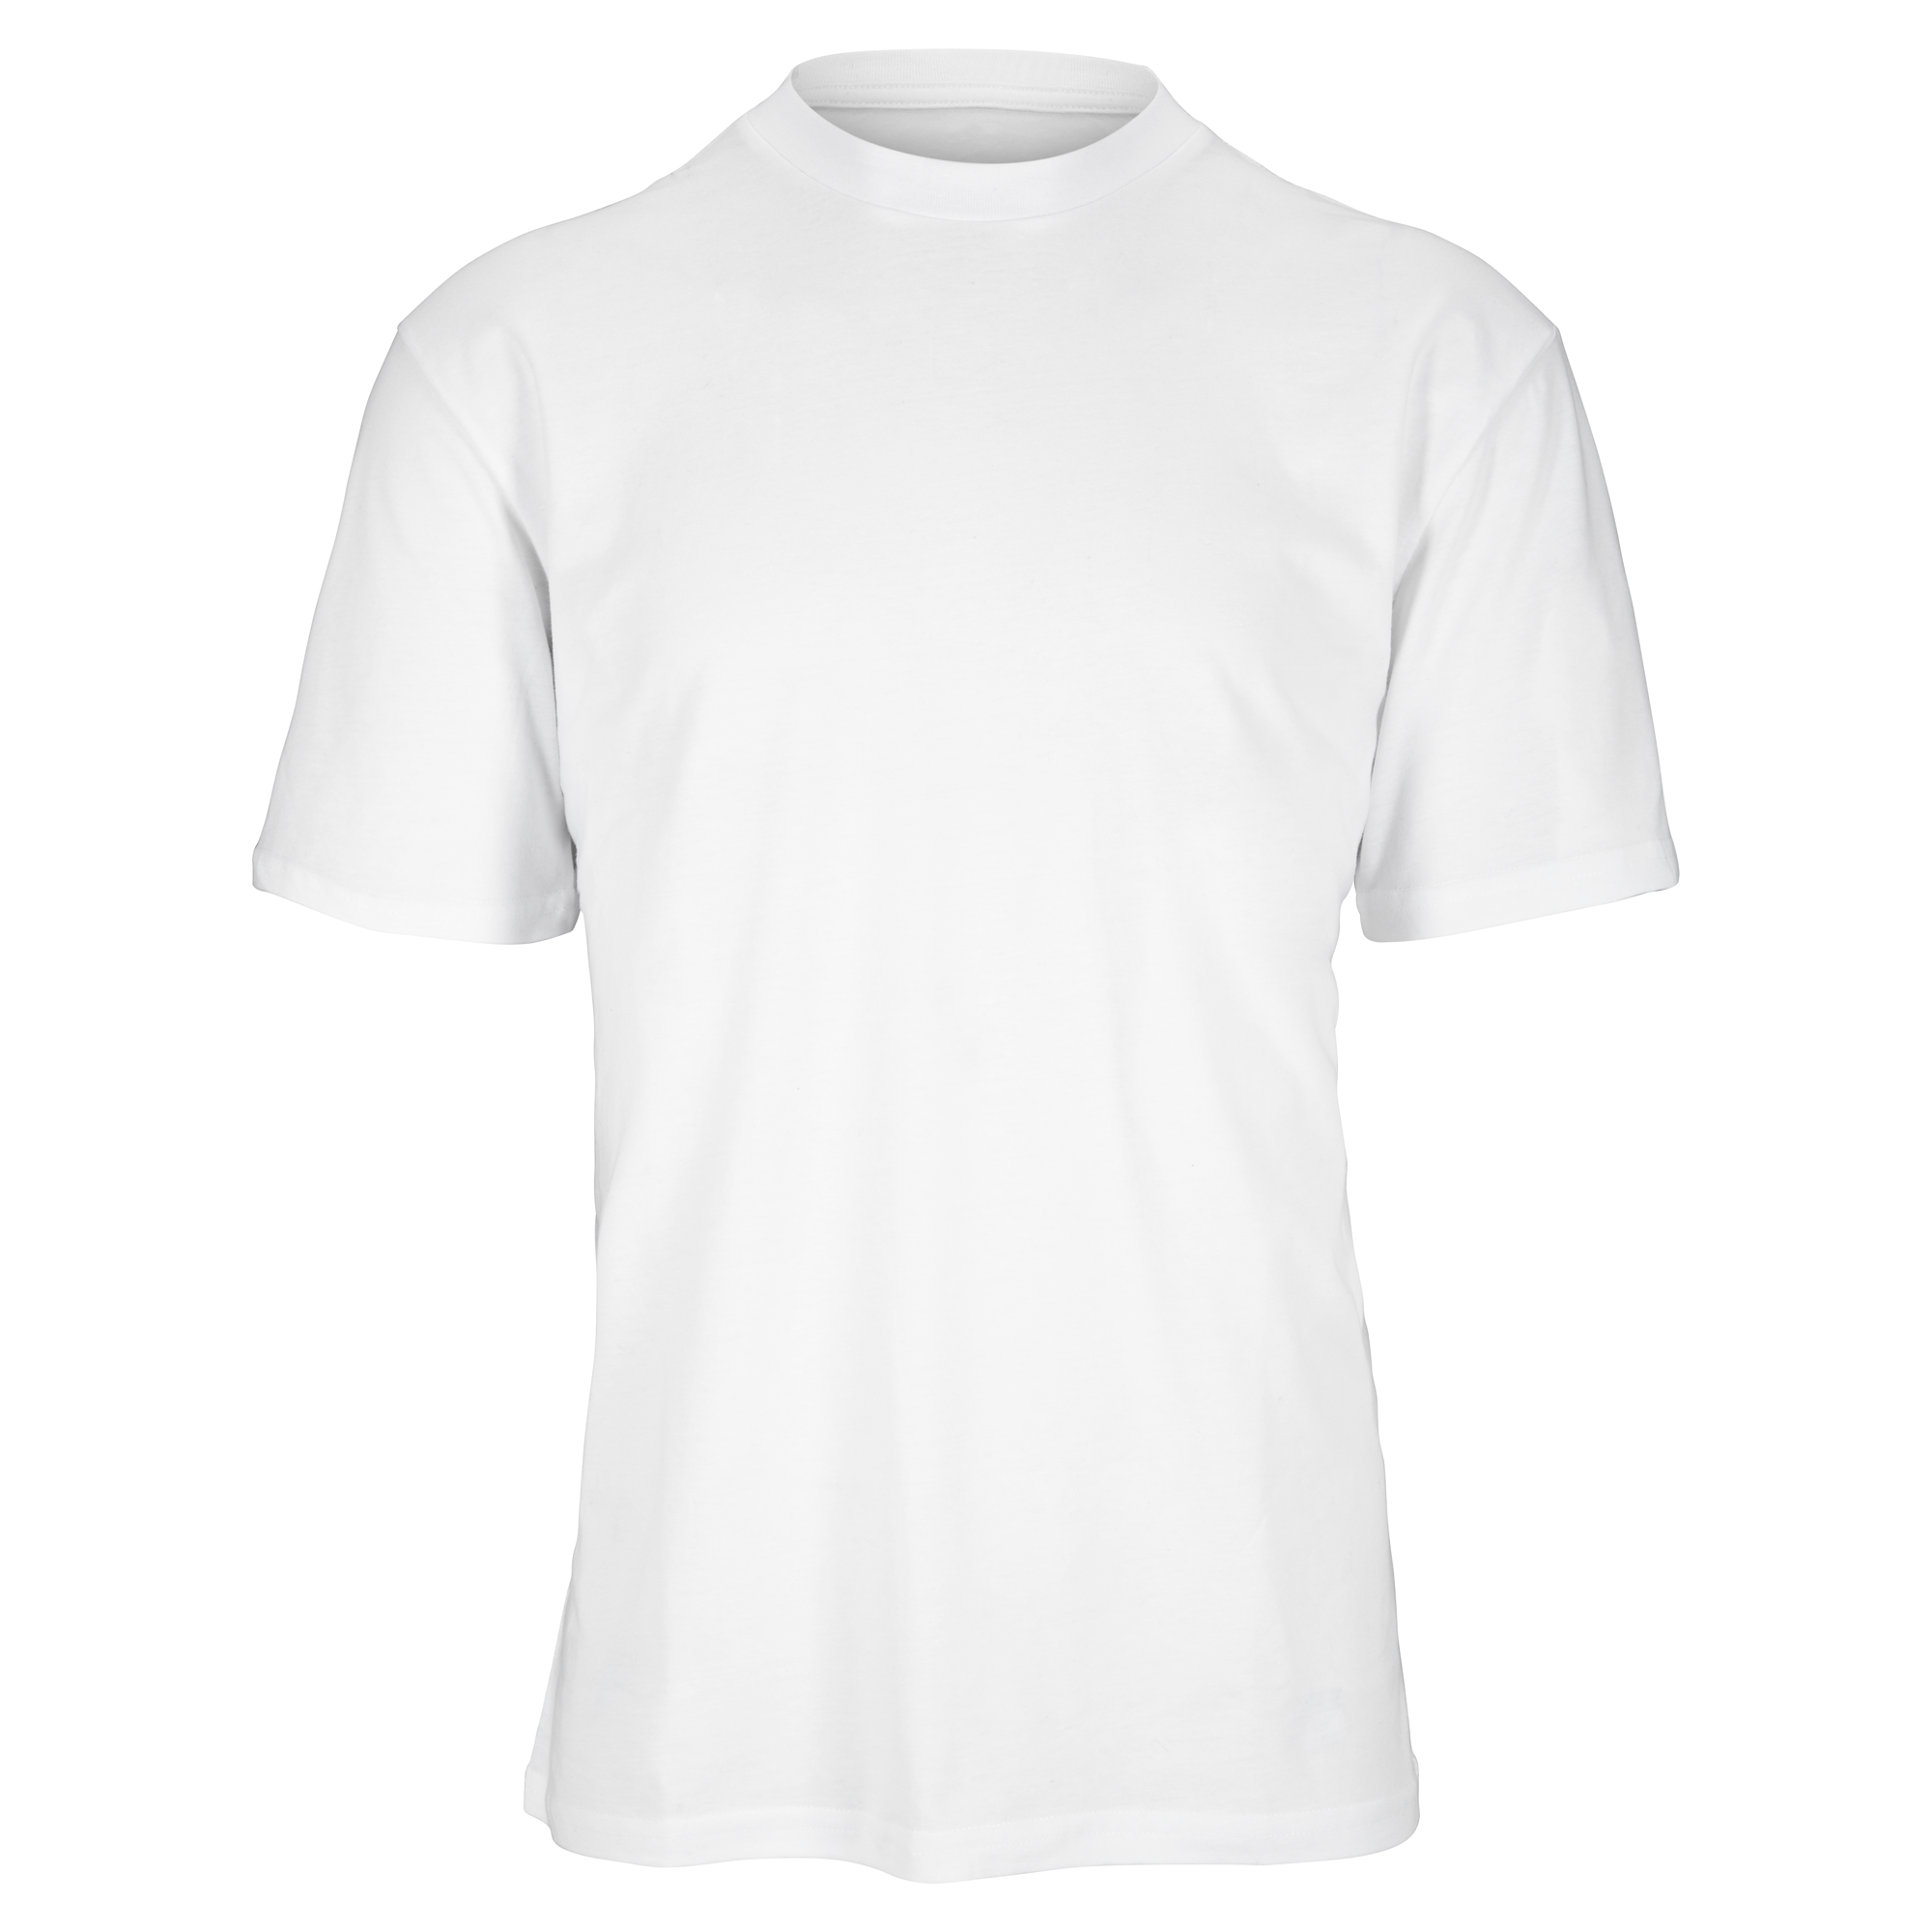 Herren-T-Shirt weiß 2er-Pack XXL (58) + product picture